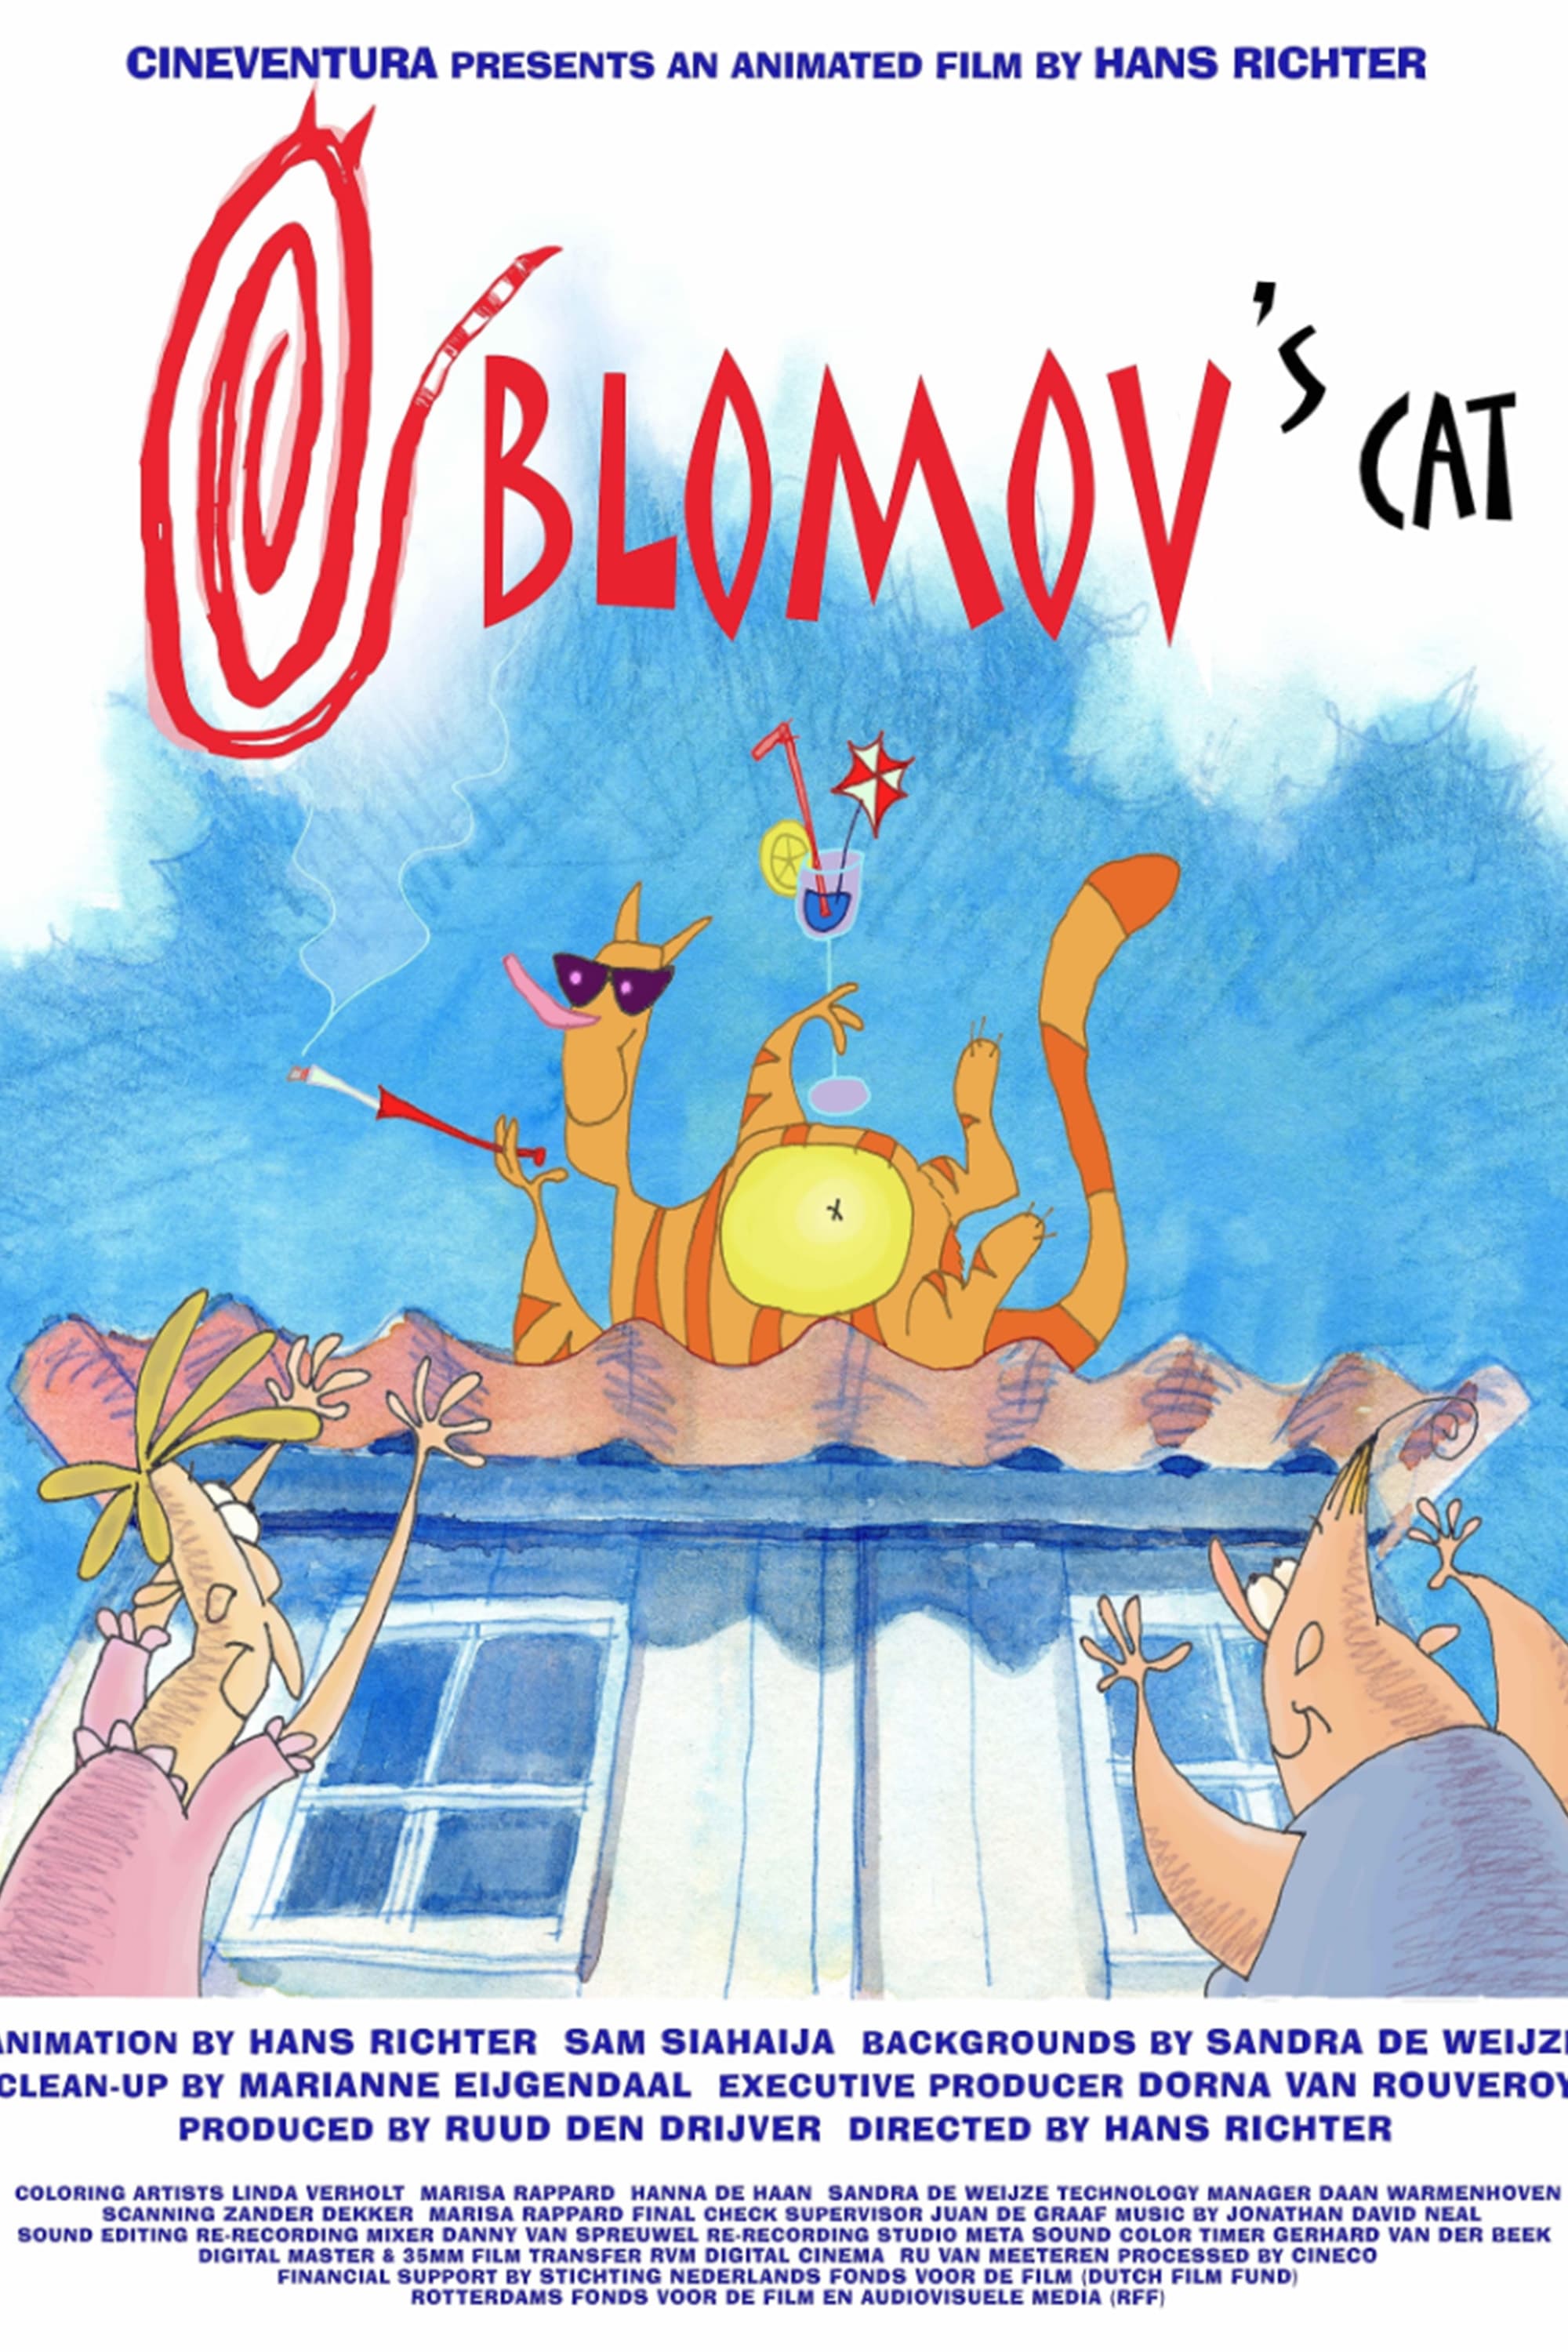 Oblomov's Cat